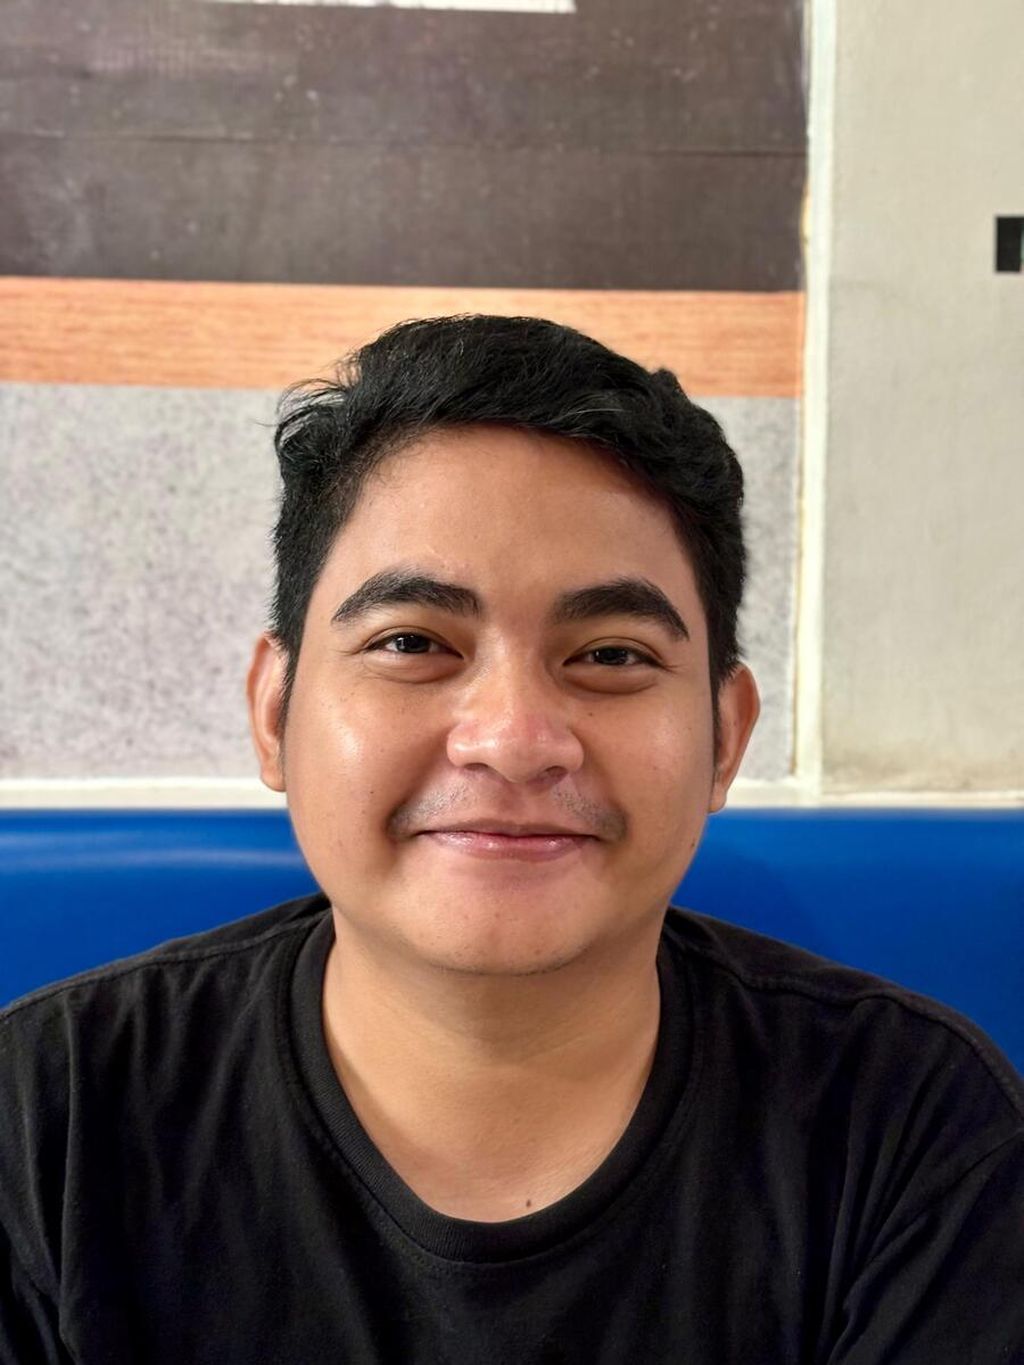 Pengembang aplikasi Android, Yohanes Rizky Gumilir (28), menyempatkan untuk bekerja sampingan sebagai penata musik di tengah kesibukannya di Jakarta. Selain menghasilkan uang tambahan, pekerjaan sampingan ini jadi wadah menyalurkan hobinya.